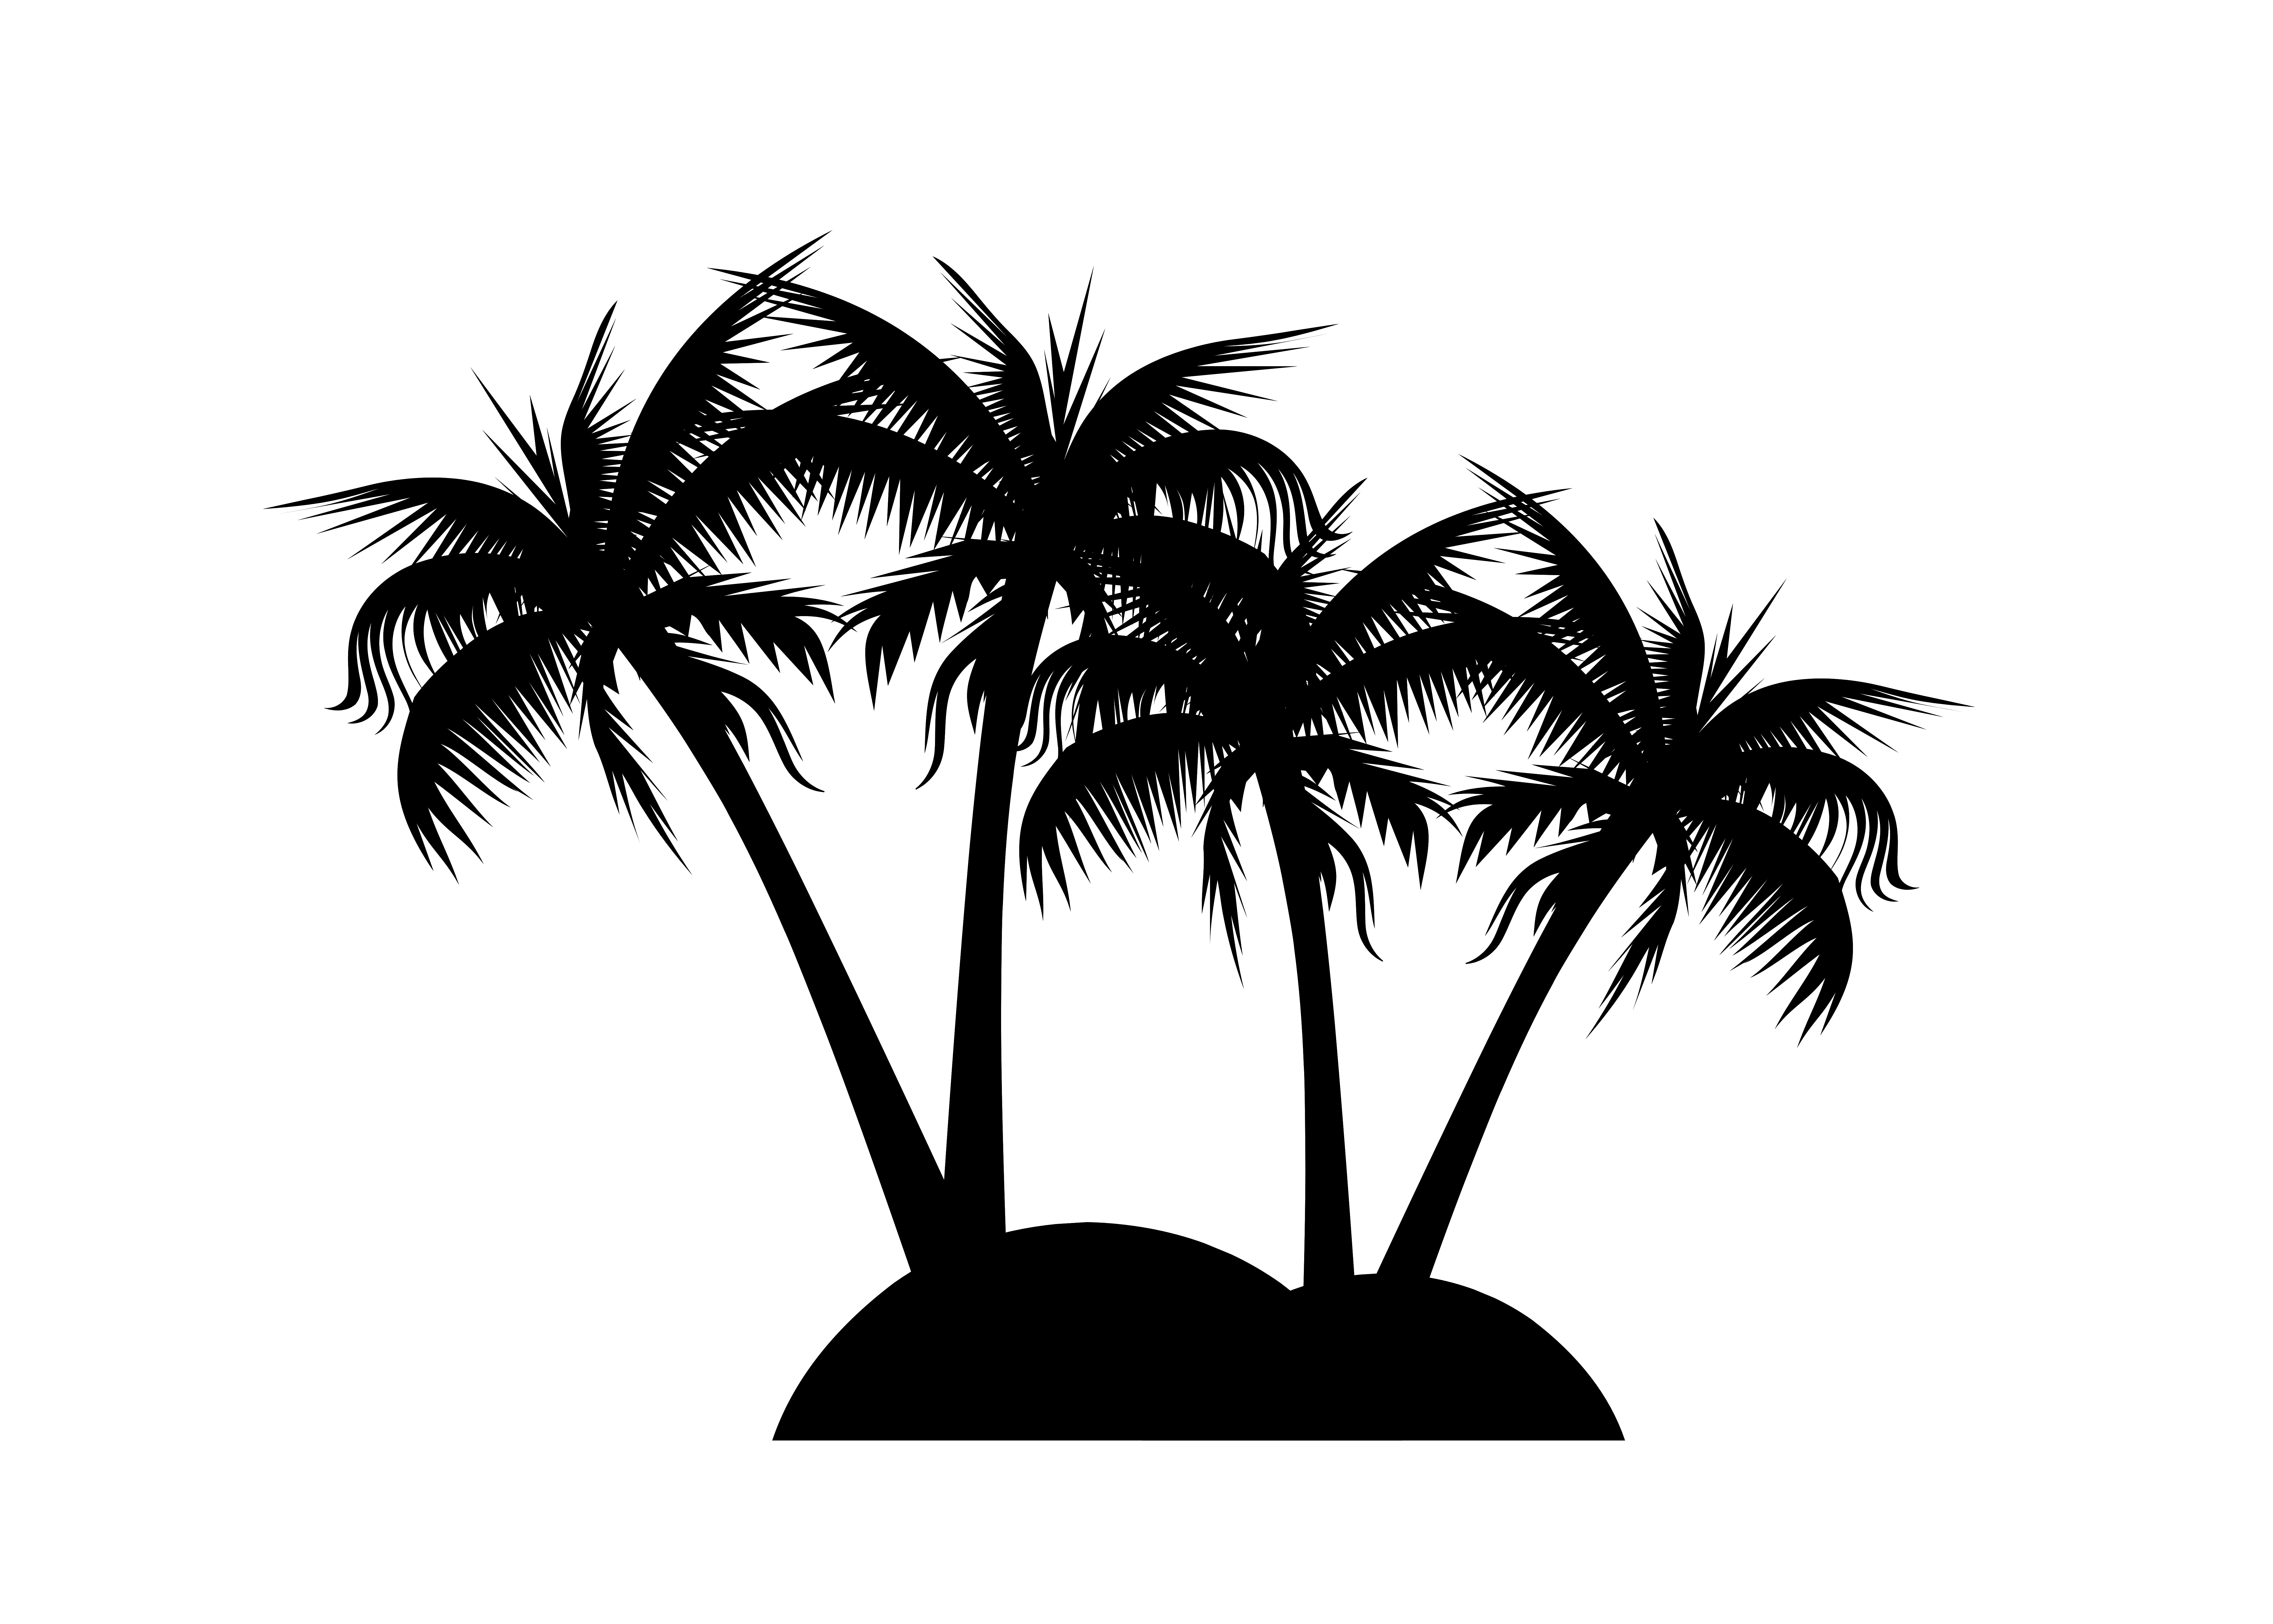 Palm tree silhouette design